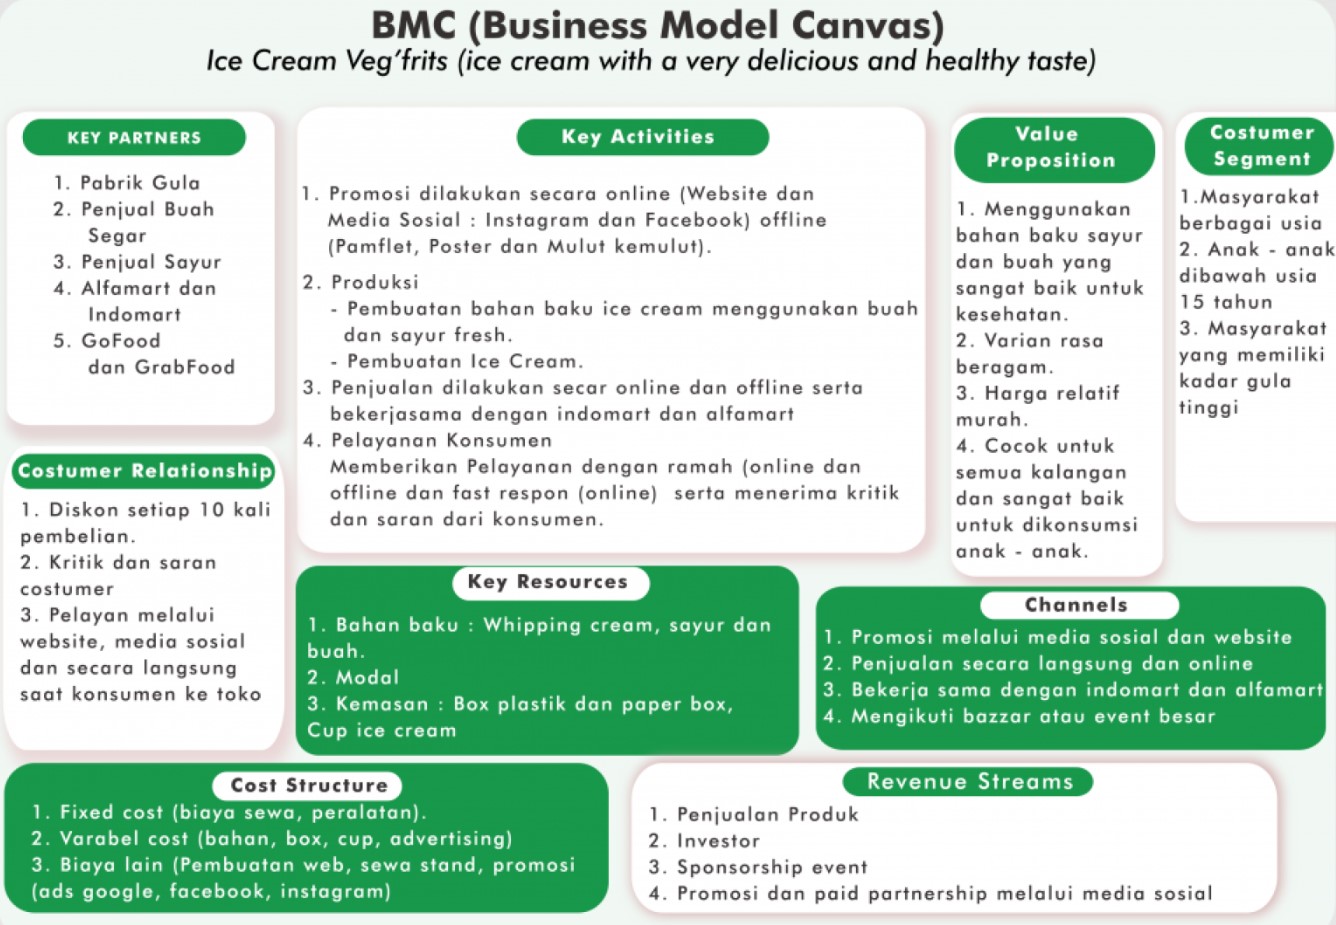 Contoh BMC Minuman: Ice Cream Veg Frits